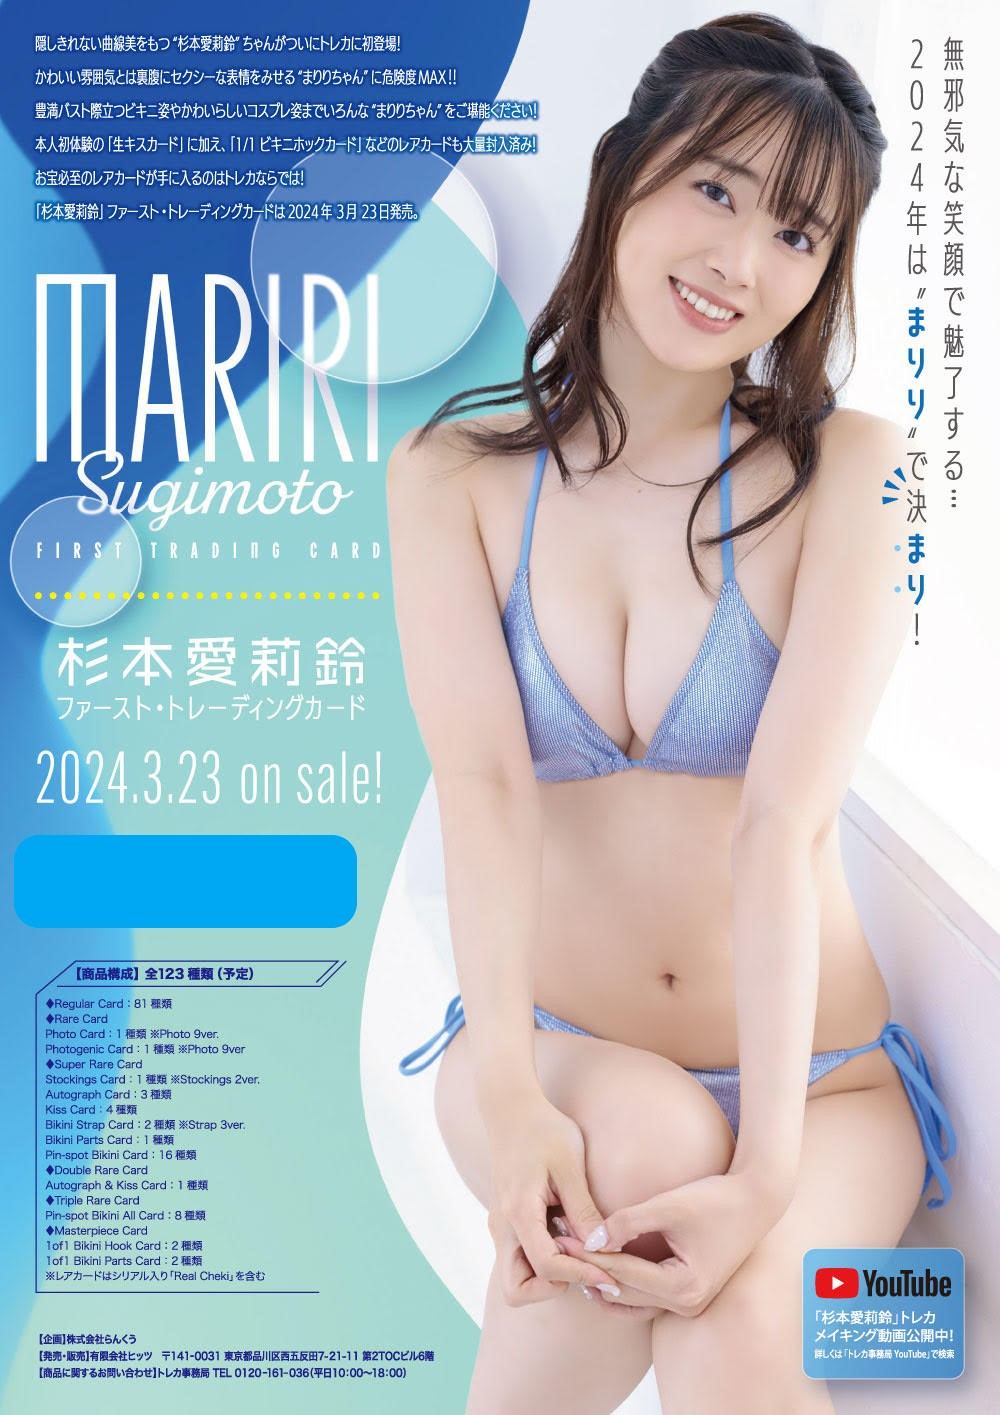 Mariri Sugimoto First Trading Card Hits